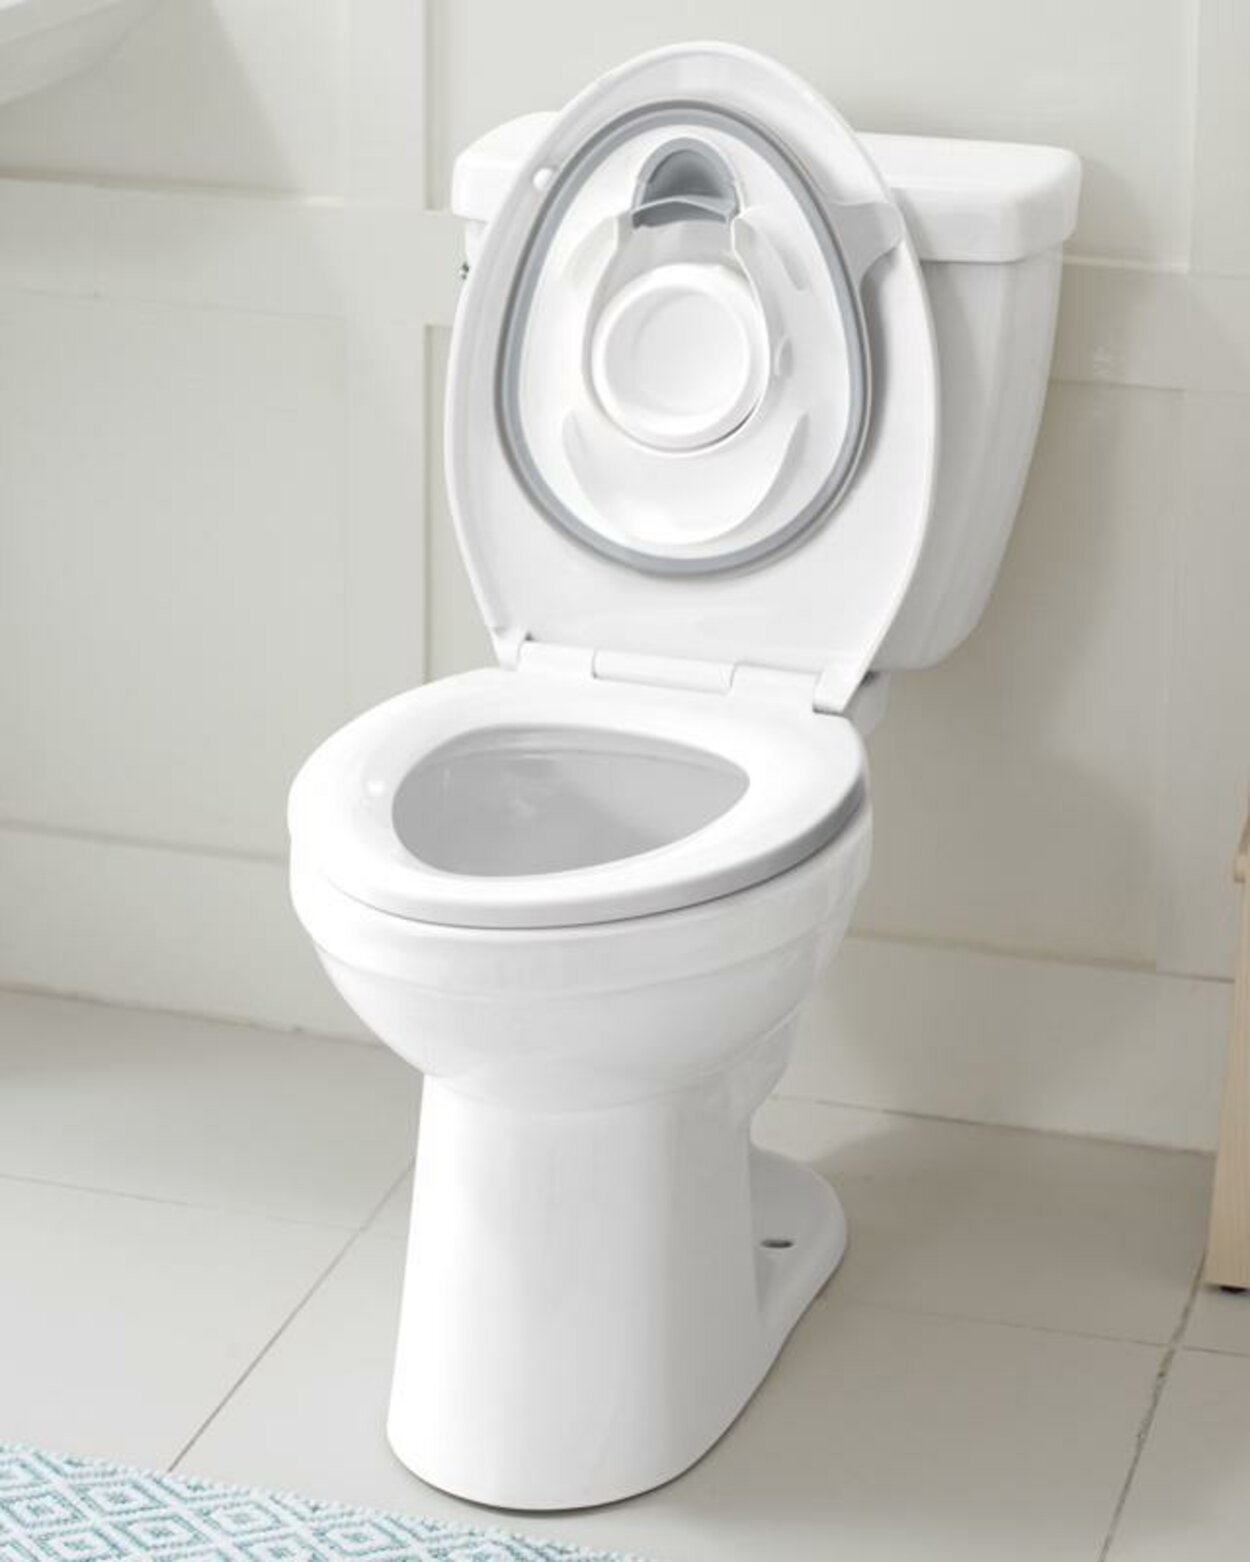 SKIP HOP Redukcia na WC s magnetickým držiakom 18m+ | Predeti.sk